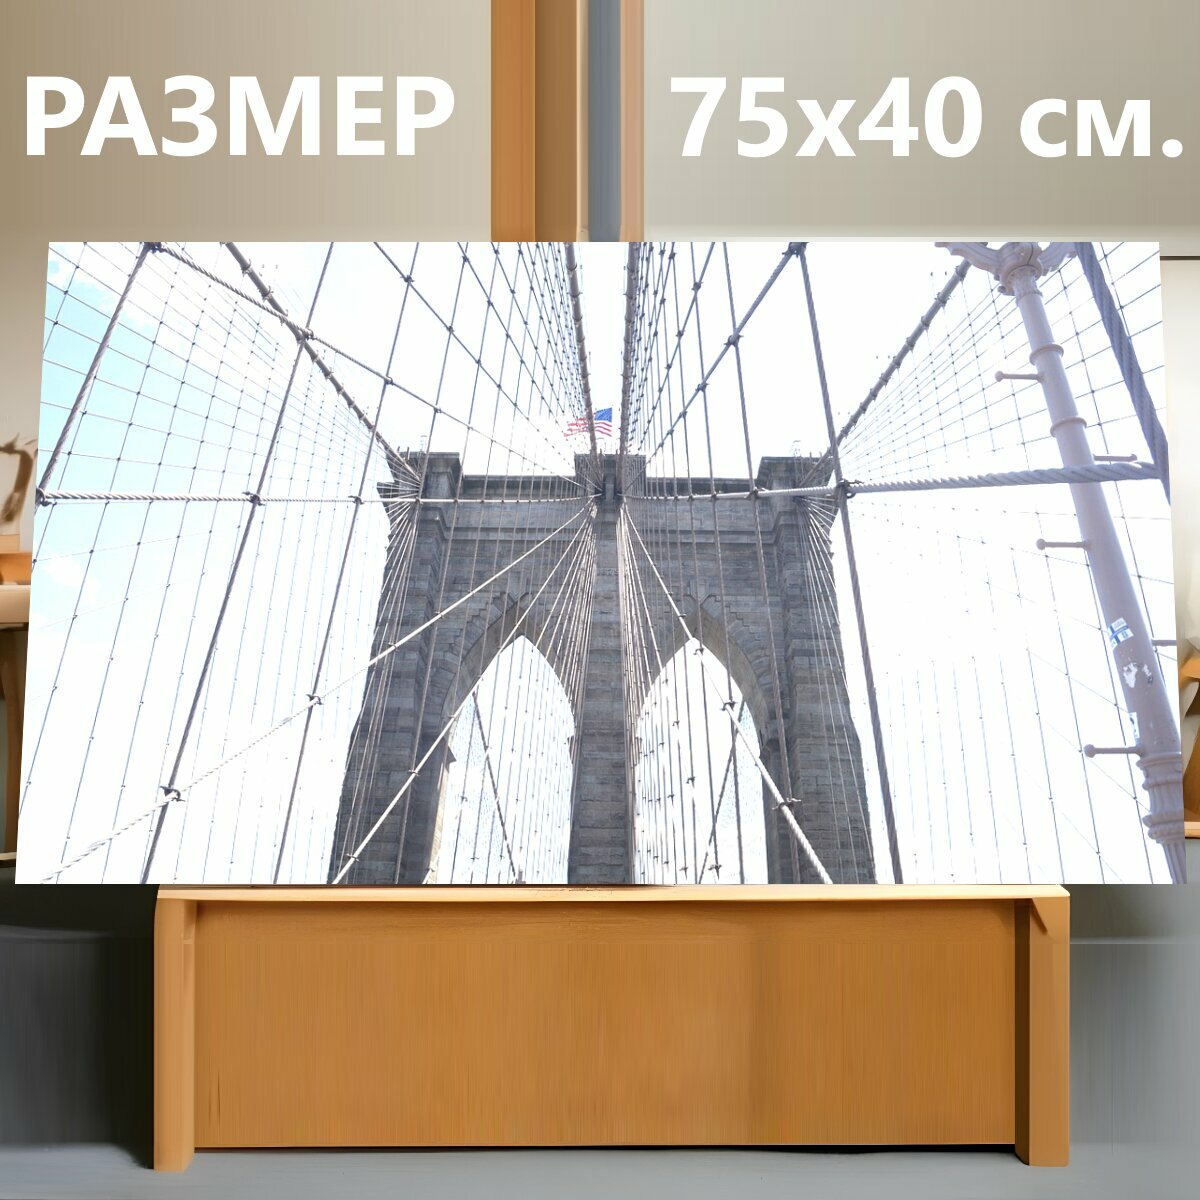 Картина на холсте "Бруклинский мост, мост, бруклин" на подрамнике 75х40 см. для интерьера